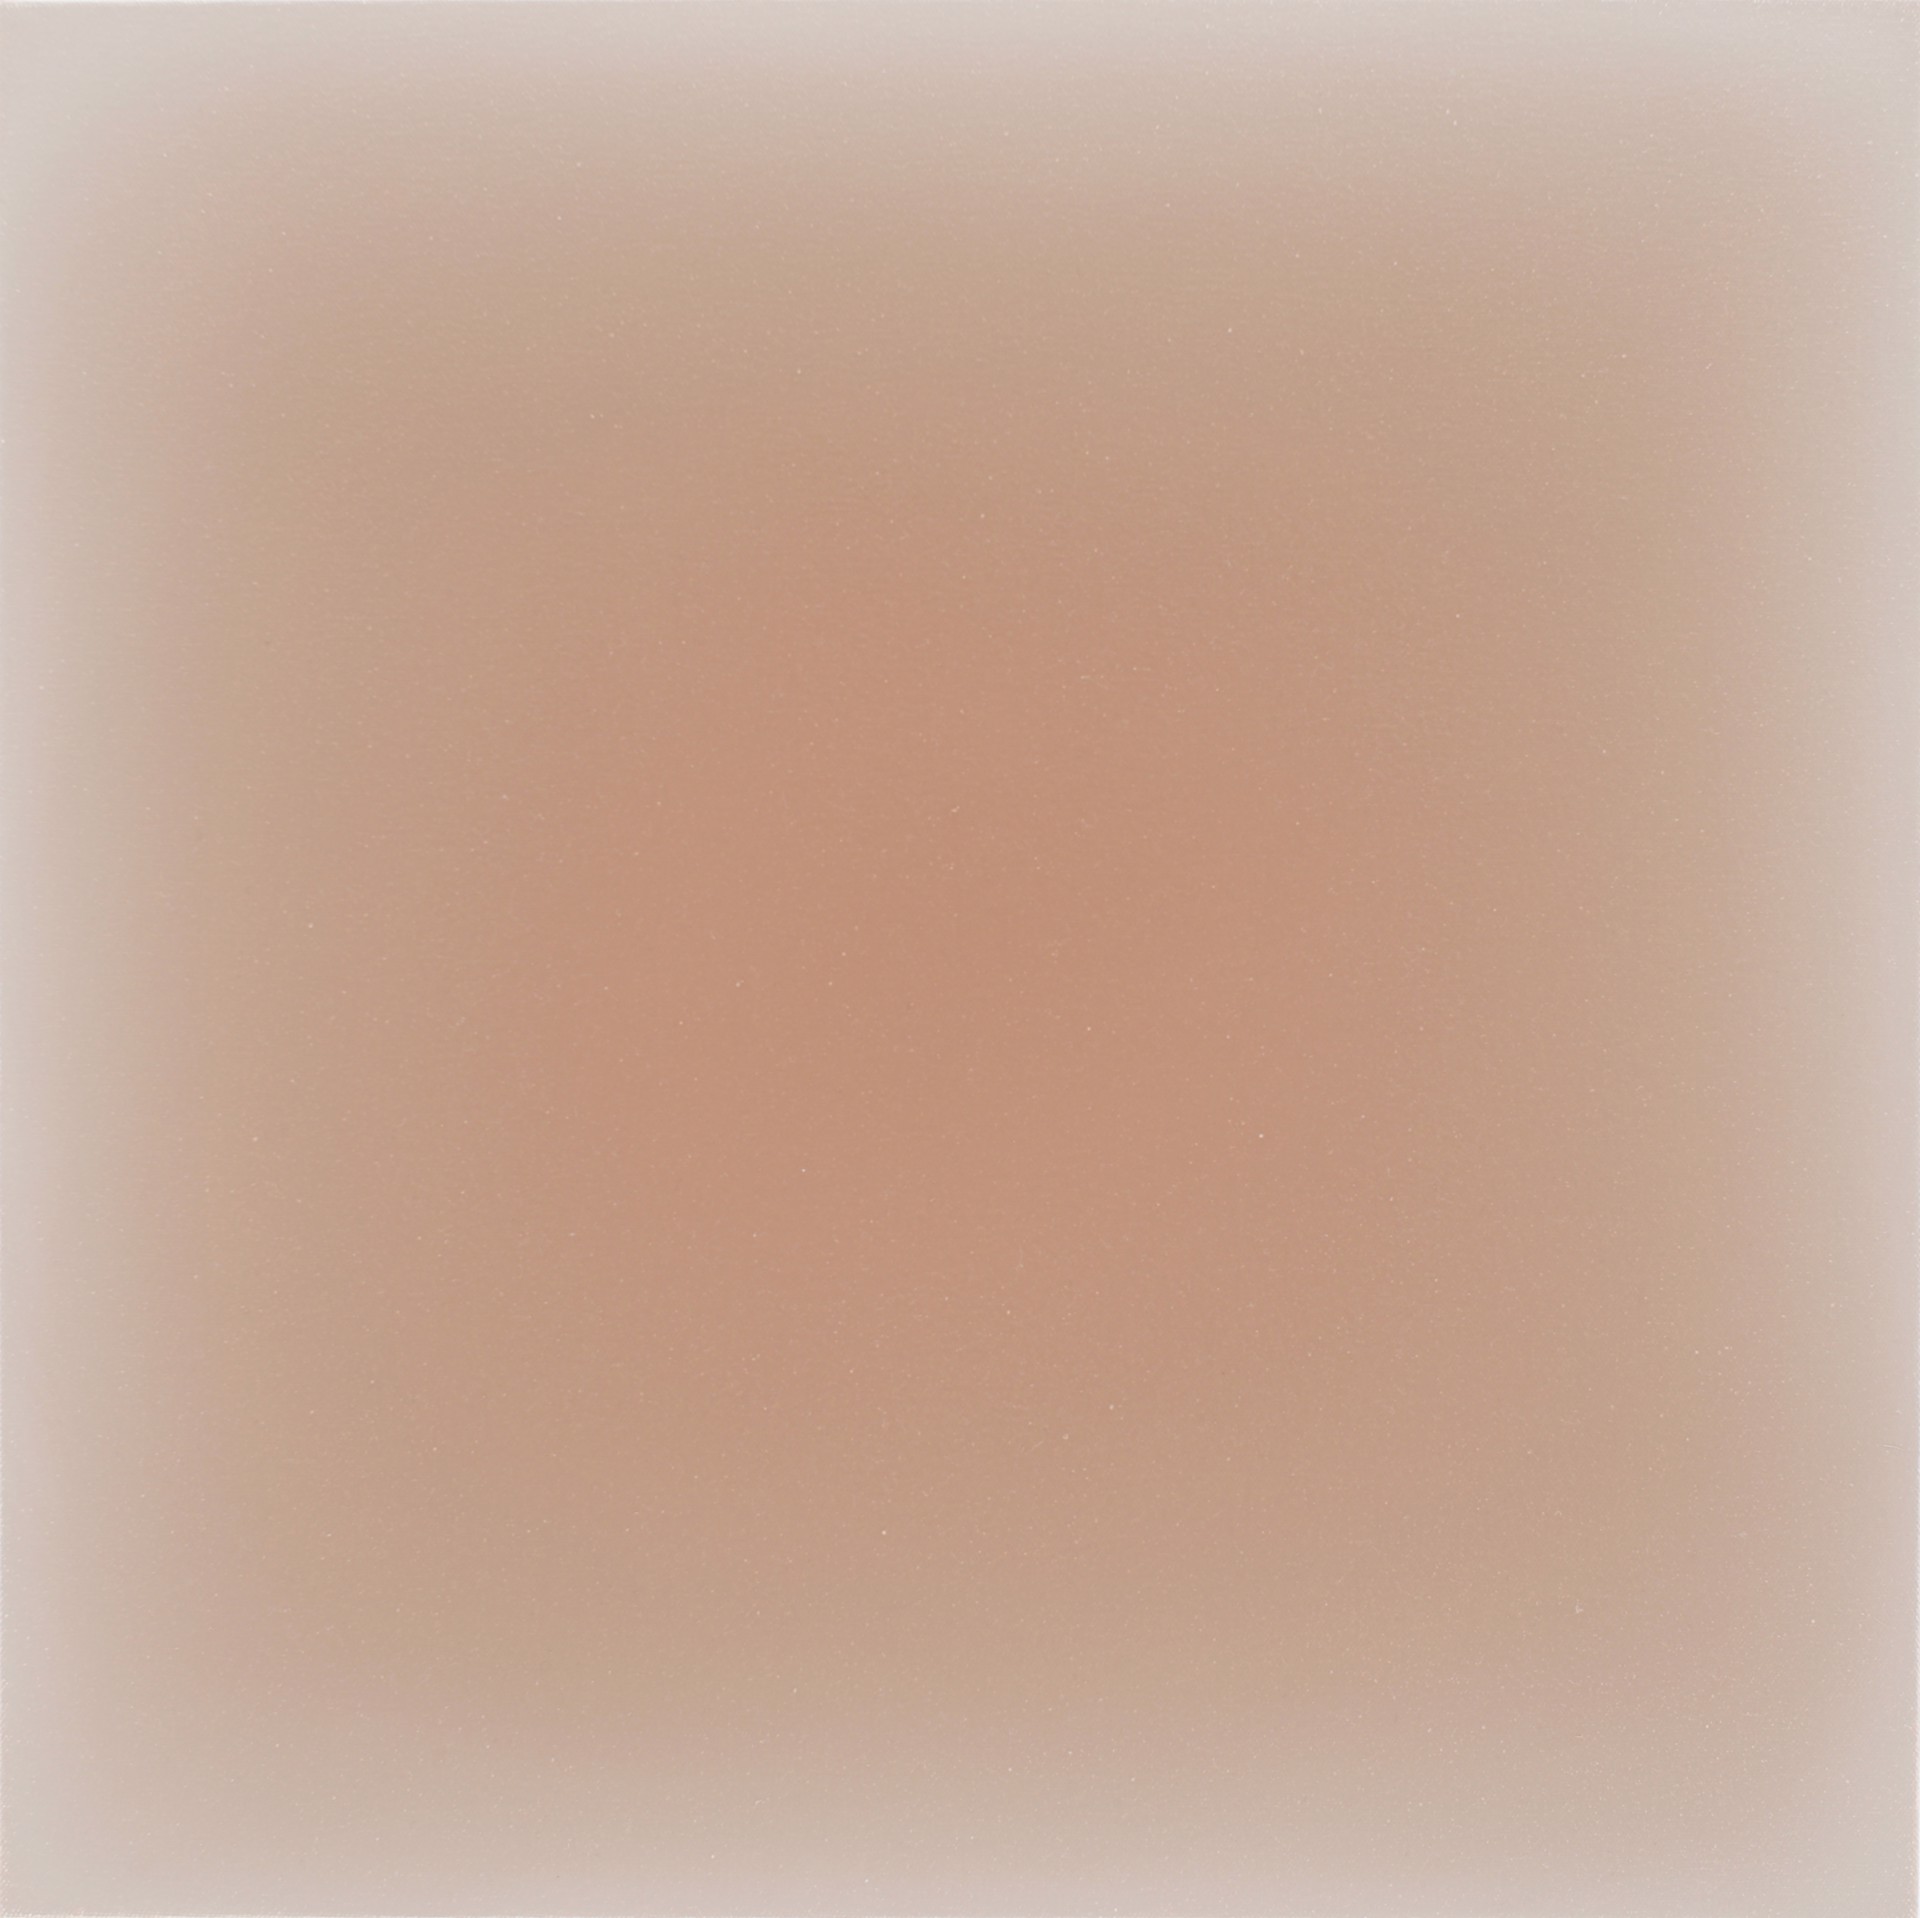 07.07.21, pinkish brown on raw umber by Gwen Hardie